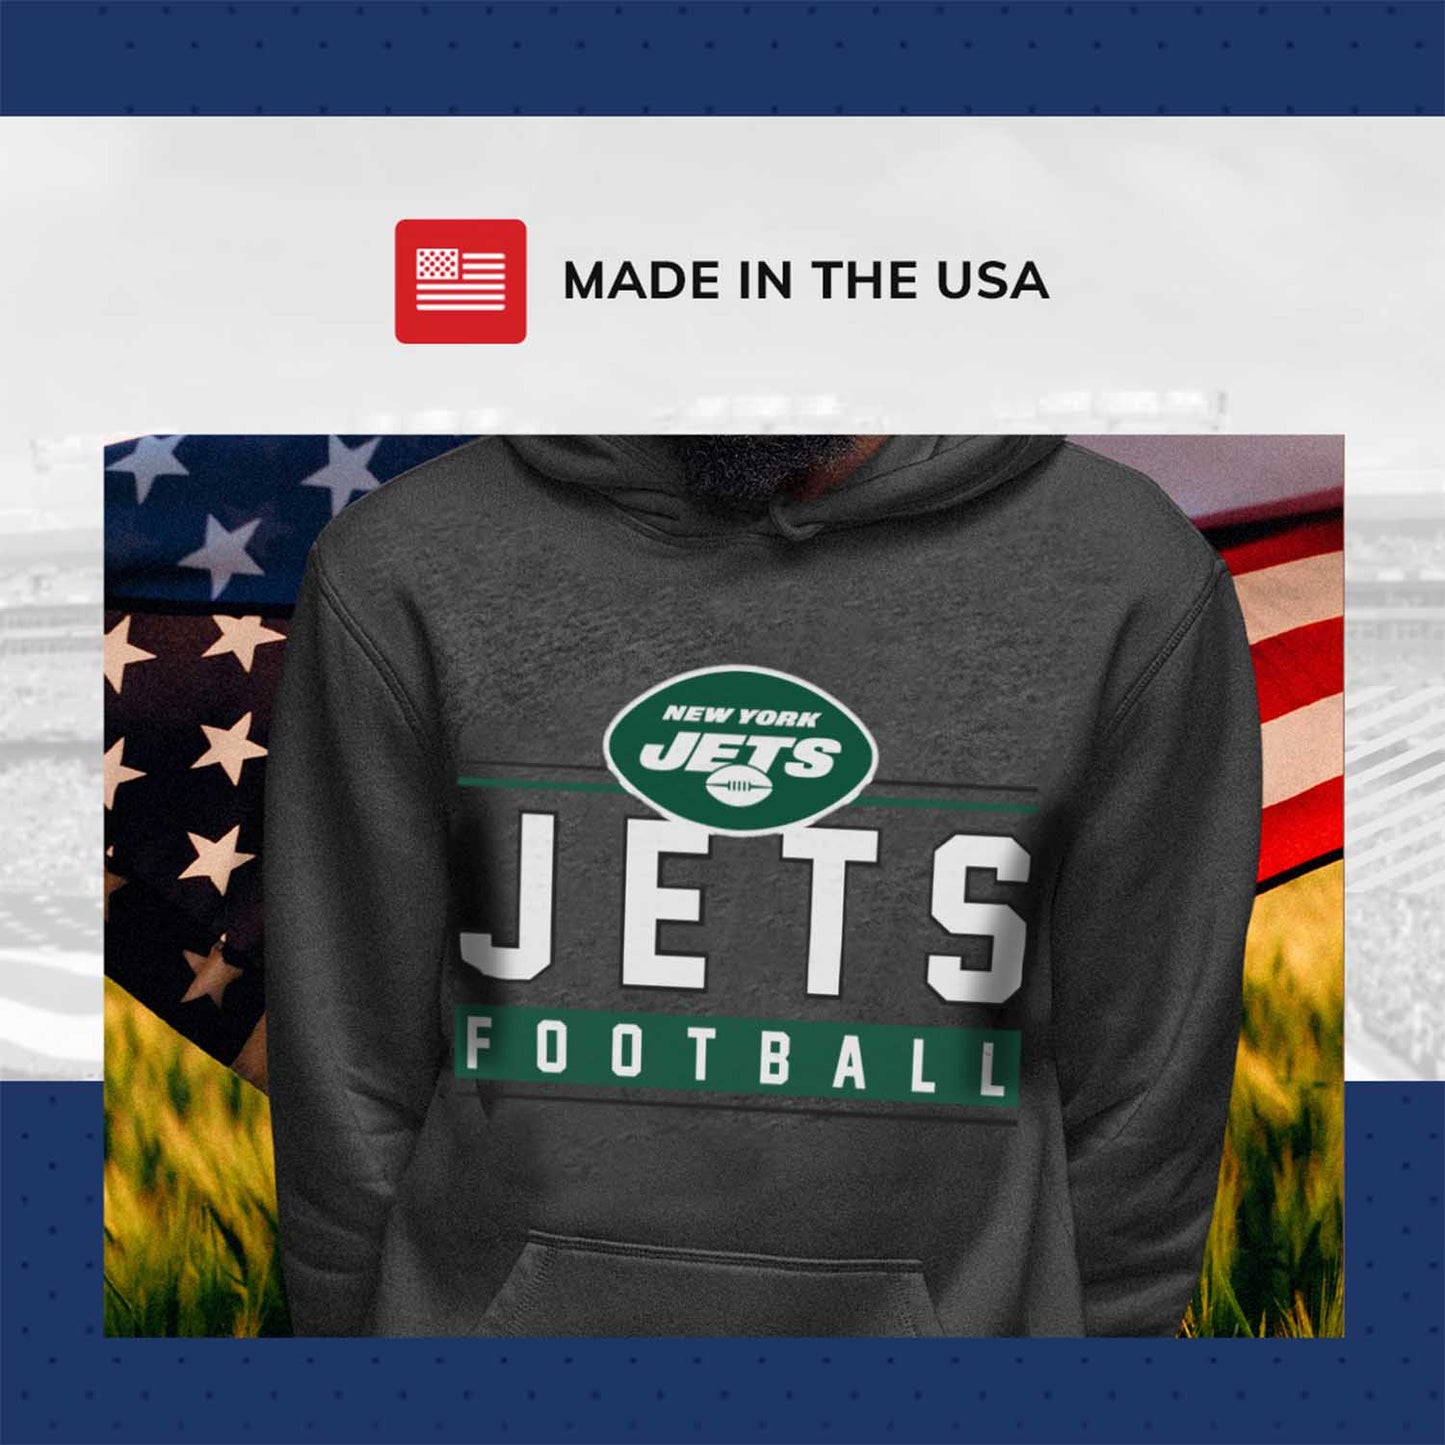 New York Jets NFL Adult True Fan Hooded Charcoal Sweatshirt - Charcoal